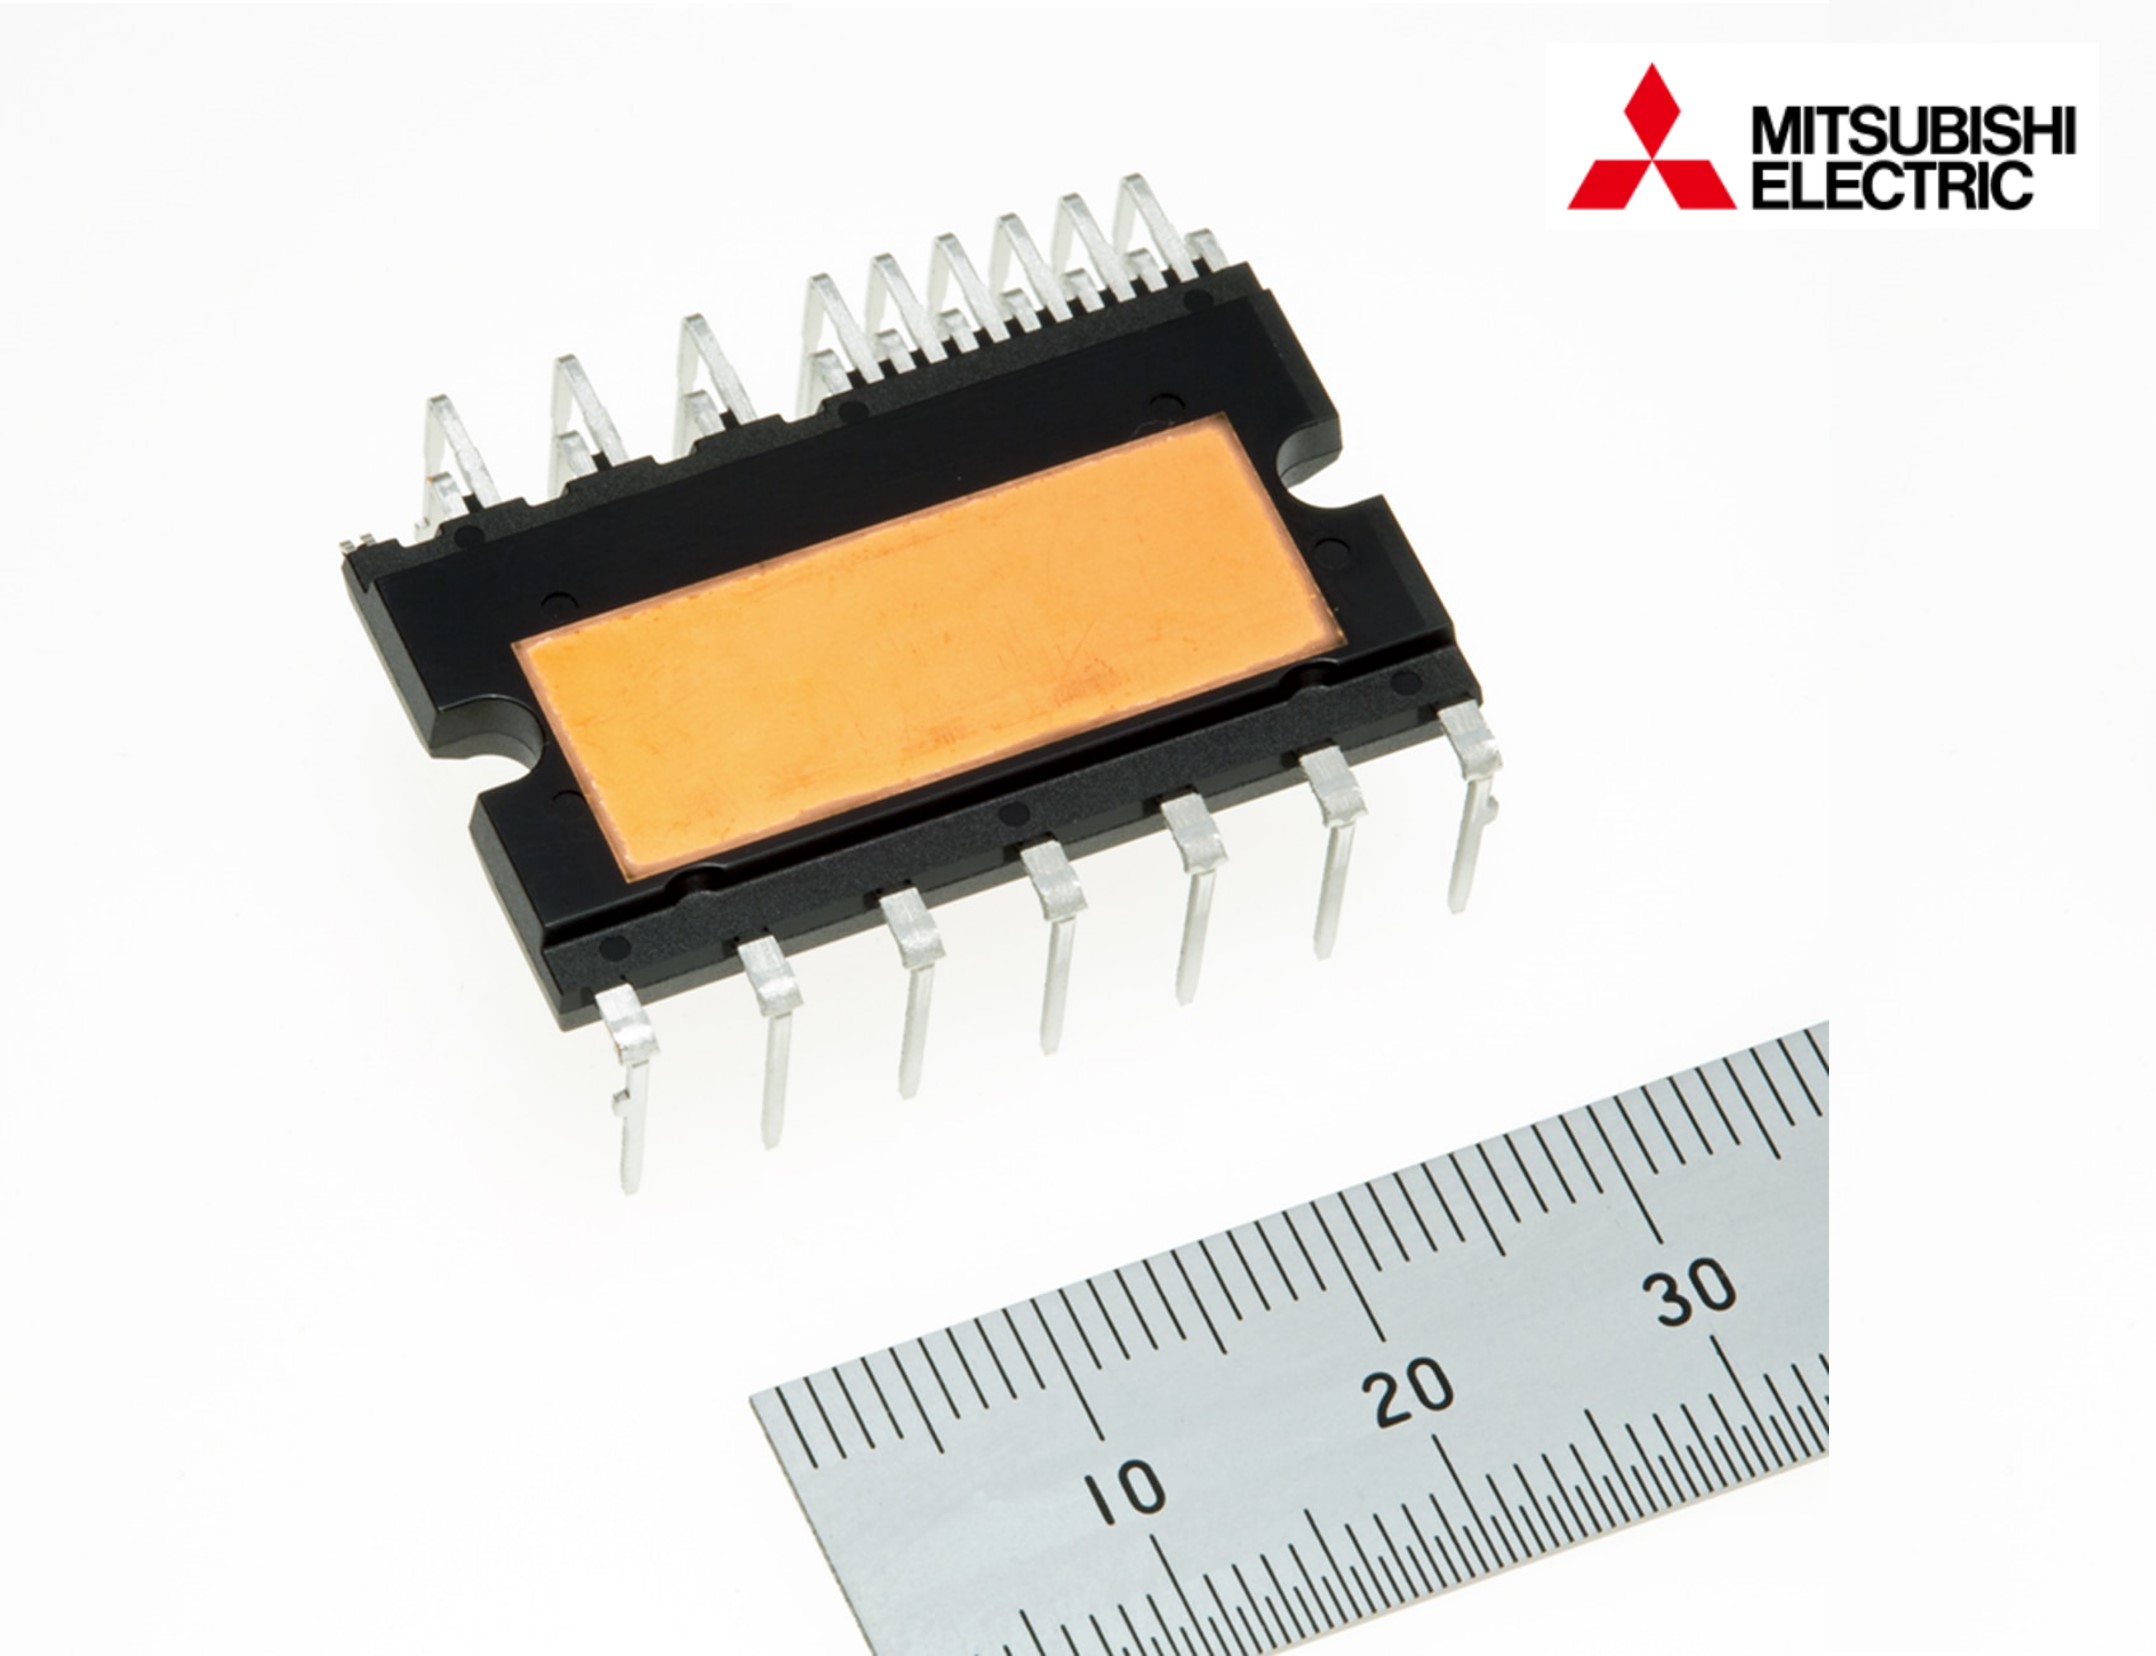 Mitsubishi Electric to Launch “SLIMDIP-Z” Power Semiconductor Module